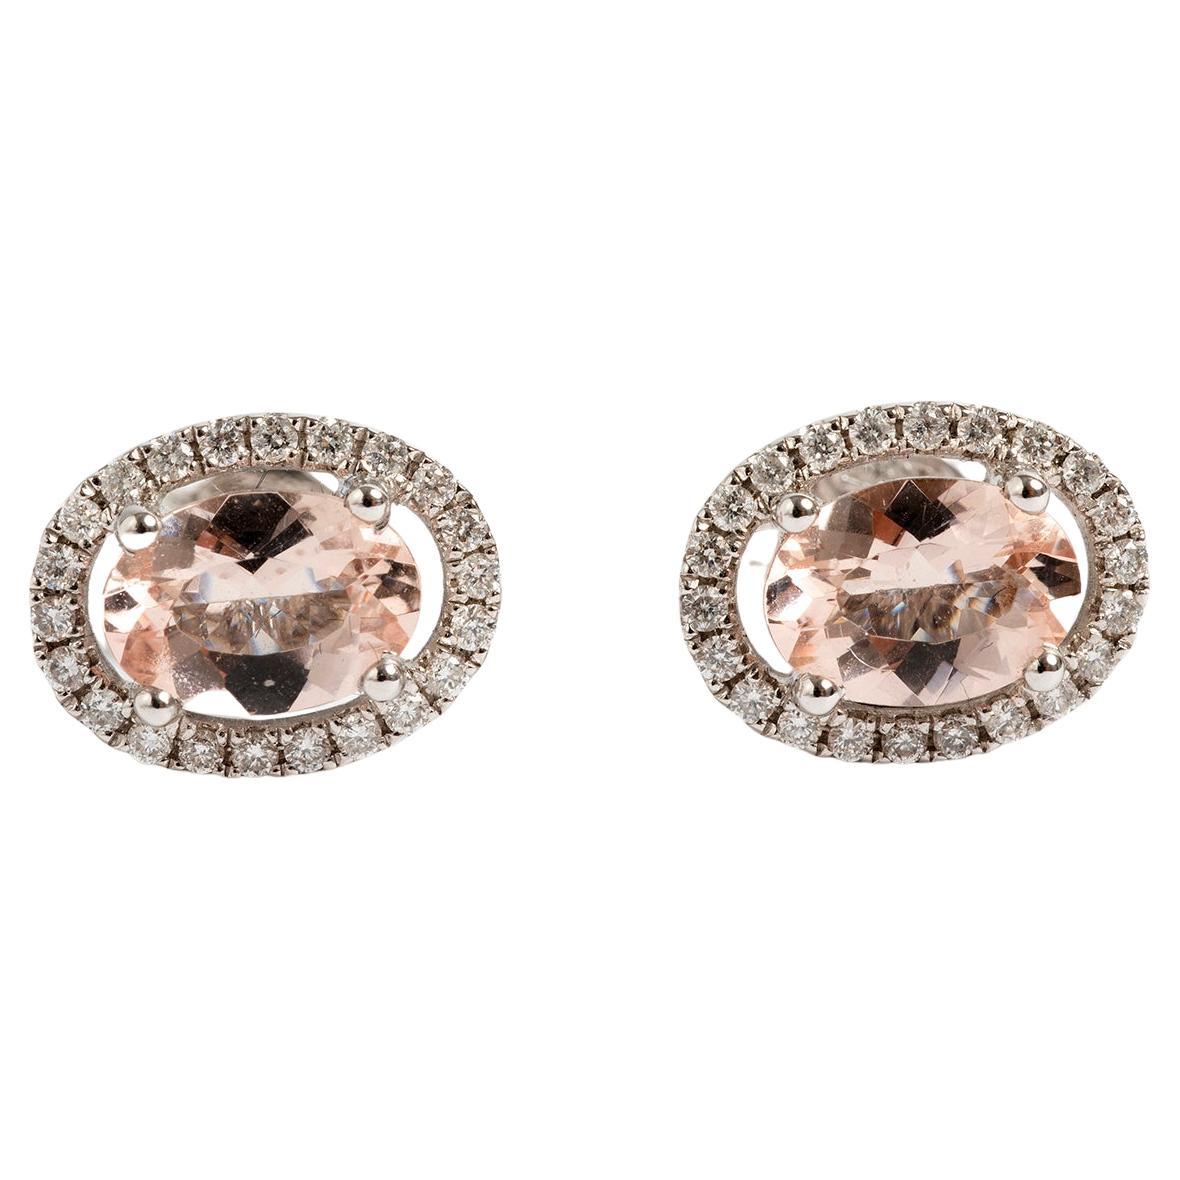 Diamond & Morganite Earrings, Set in 18 Carat White Gold.